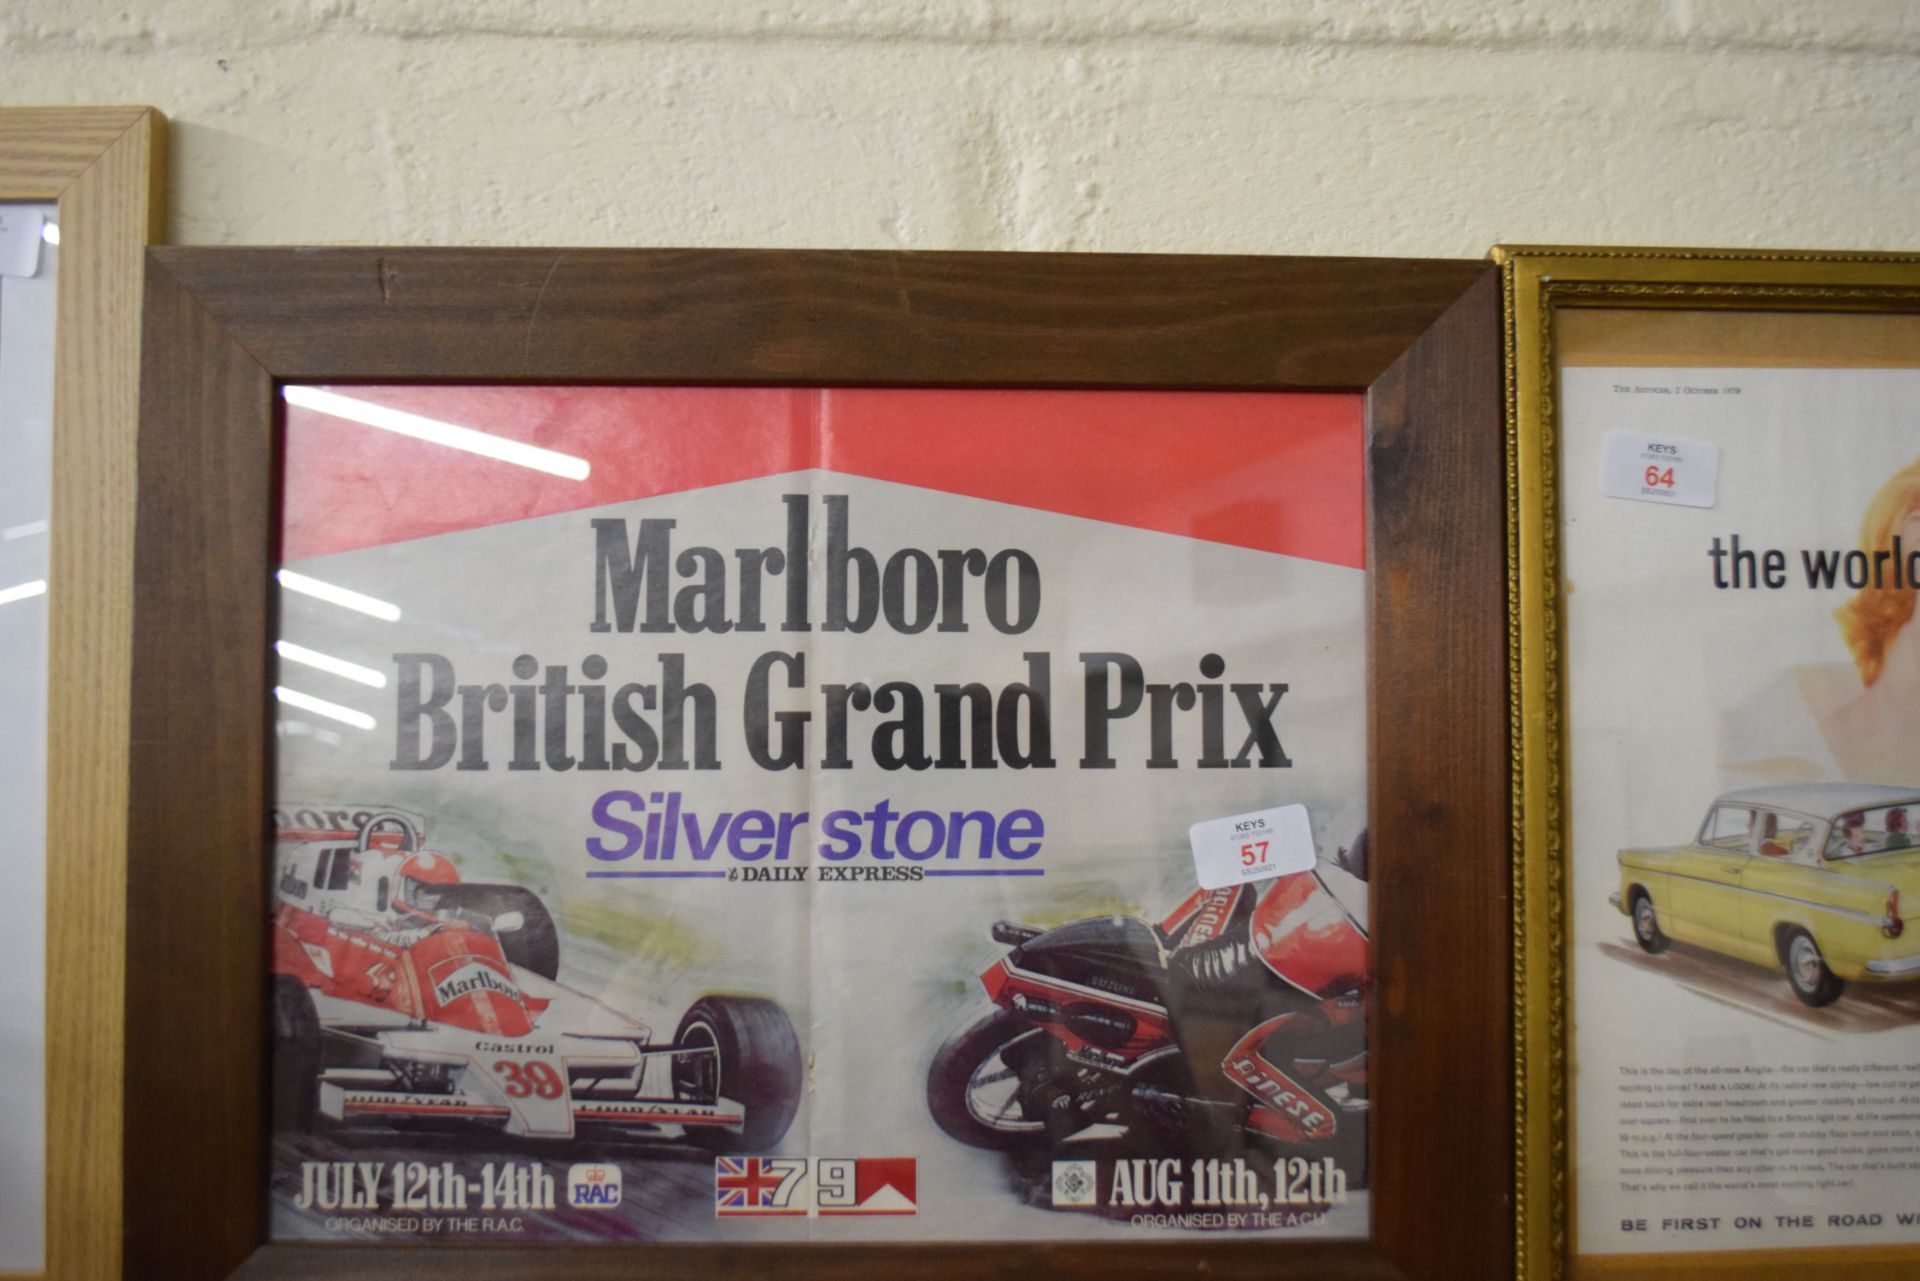 Framed advertising print for the Marlboro British Grand Prix at Silverstone